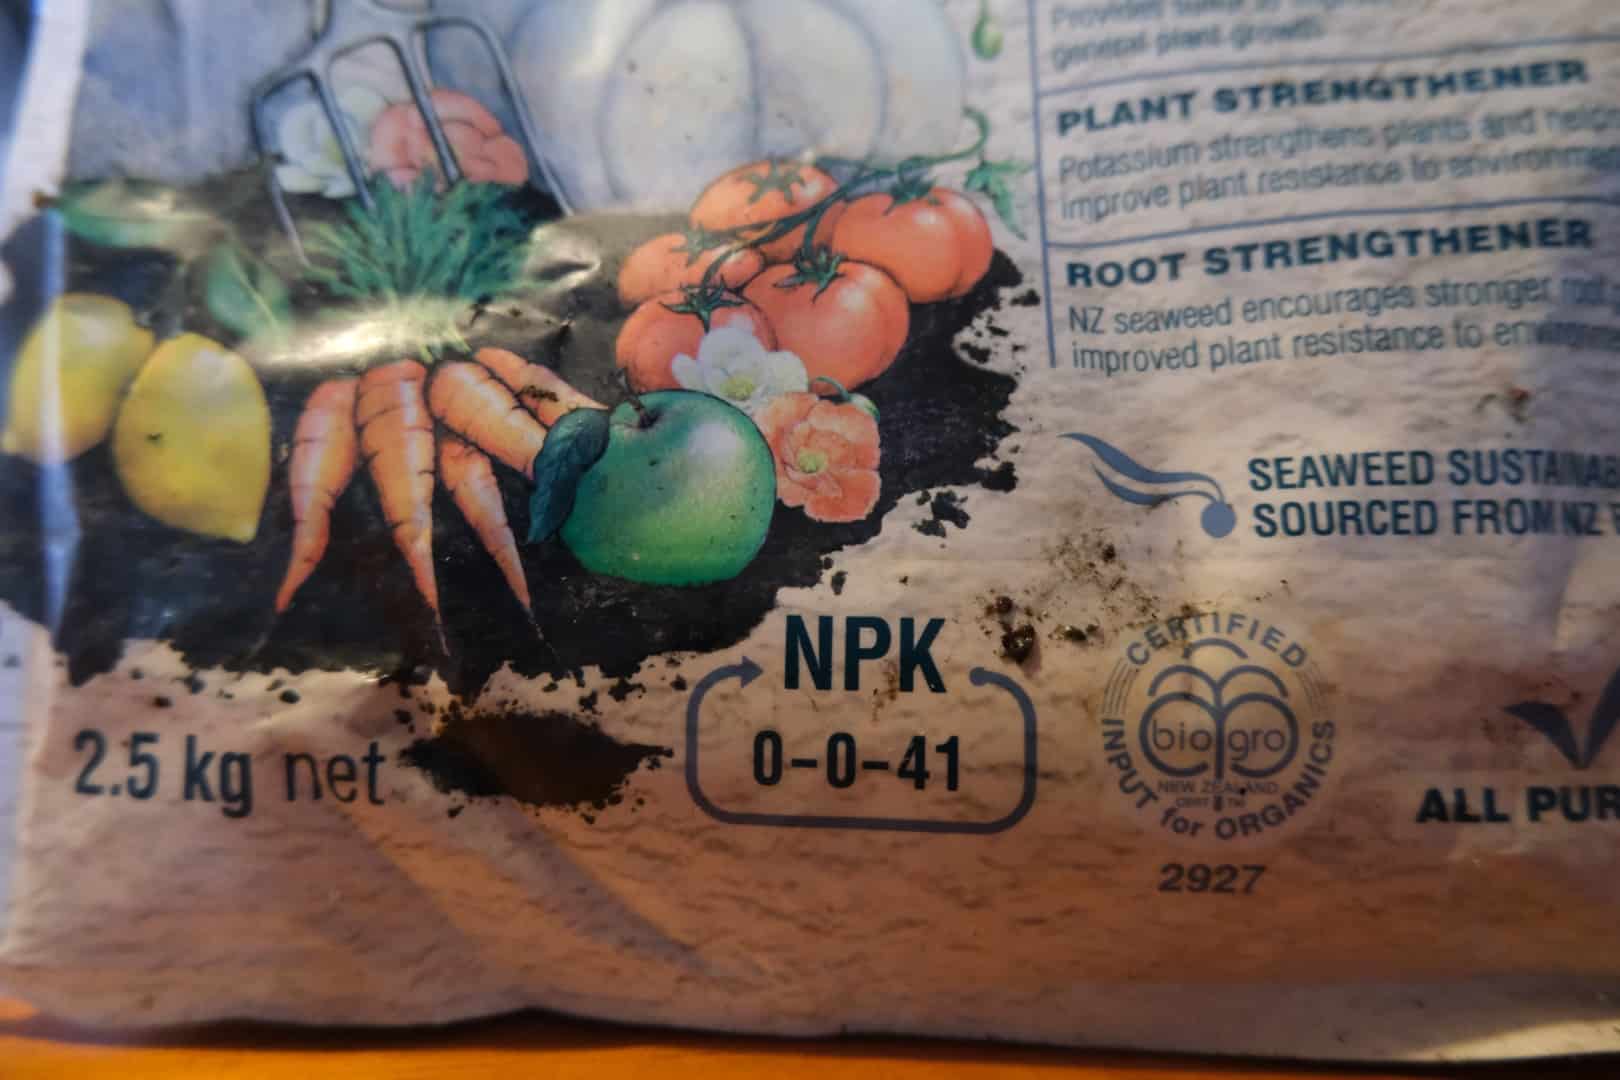 Front of a bag of fertiliser showing the NPK amounts